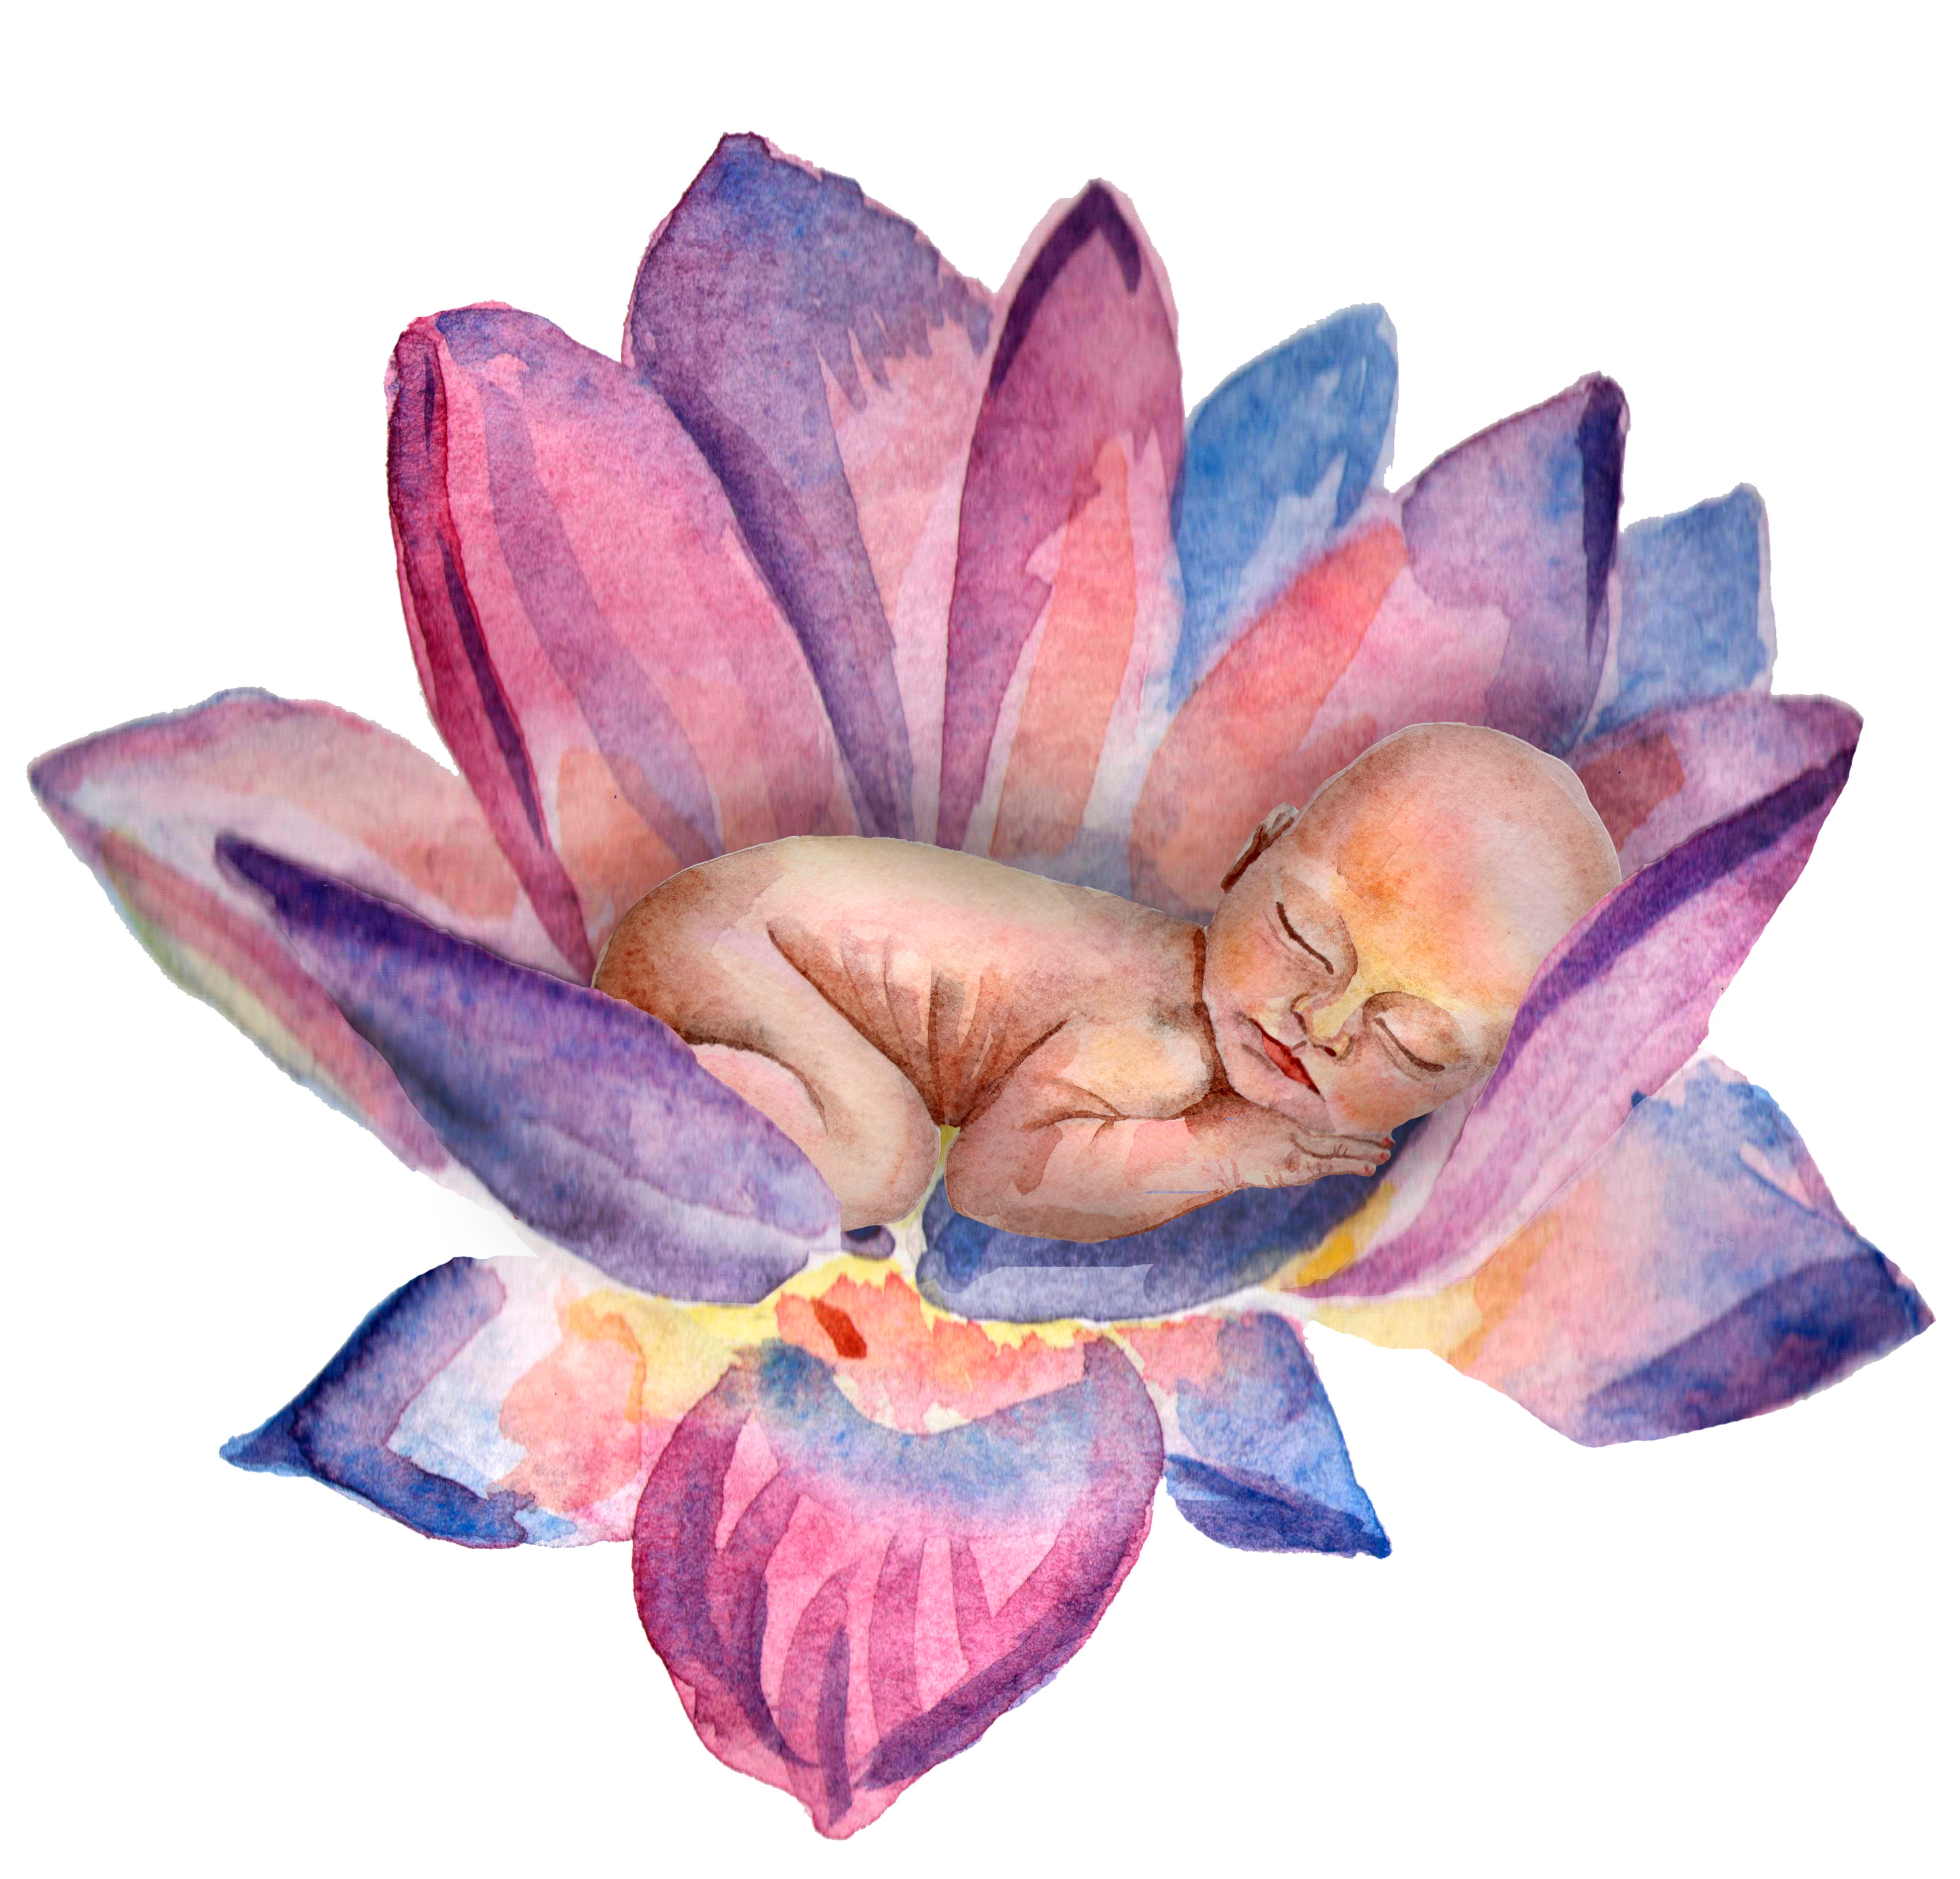 Natural childbirth with Hypnobirthing.